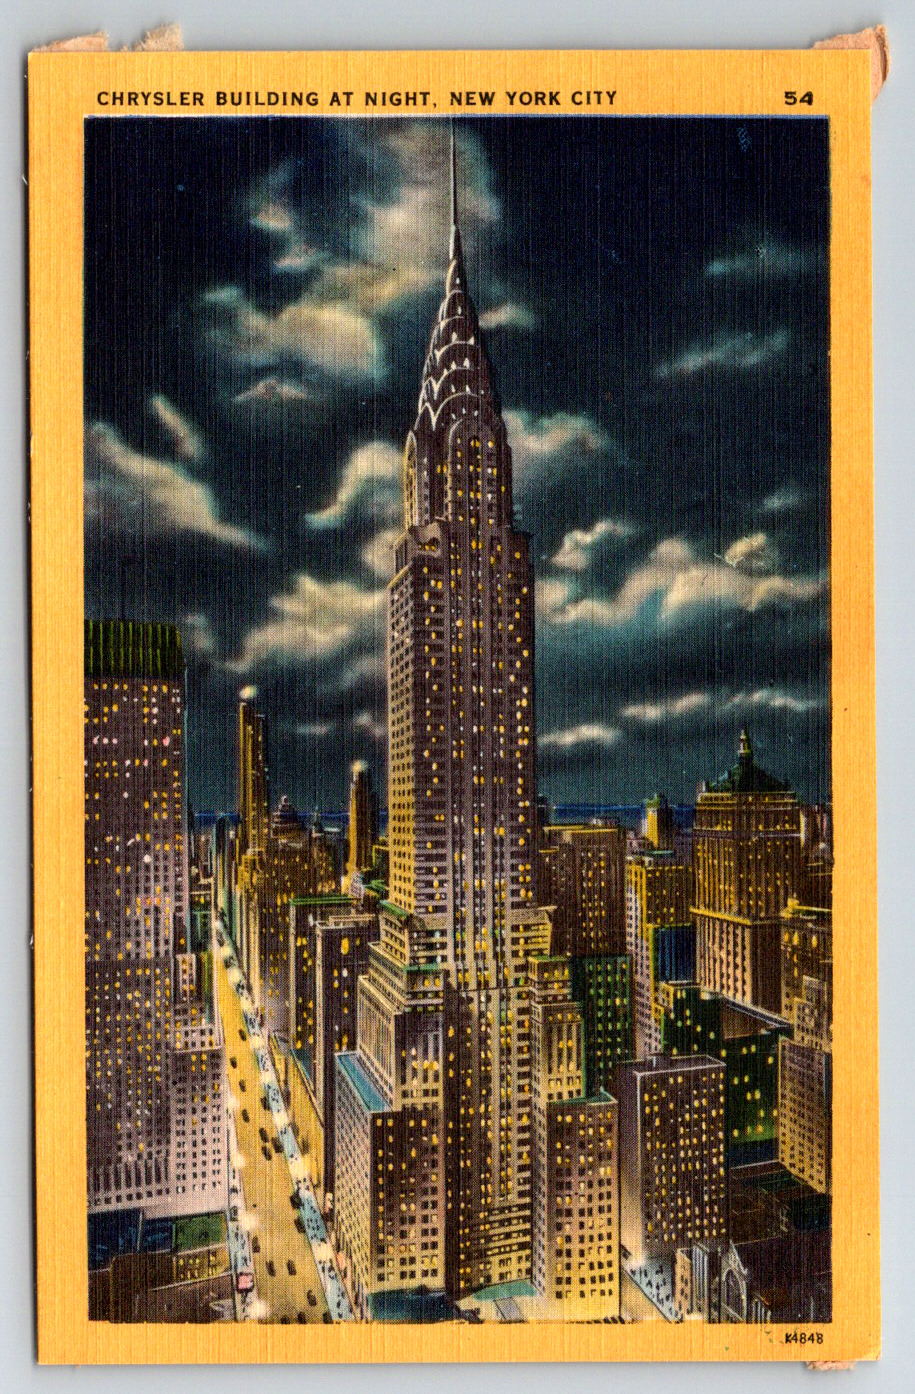 c1940s Chrysler Building Night View New York City Vintage Linen Postcard